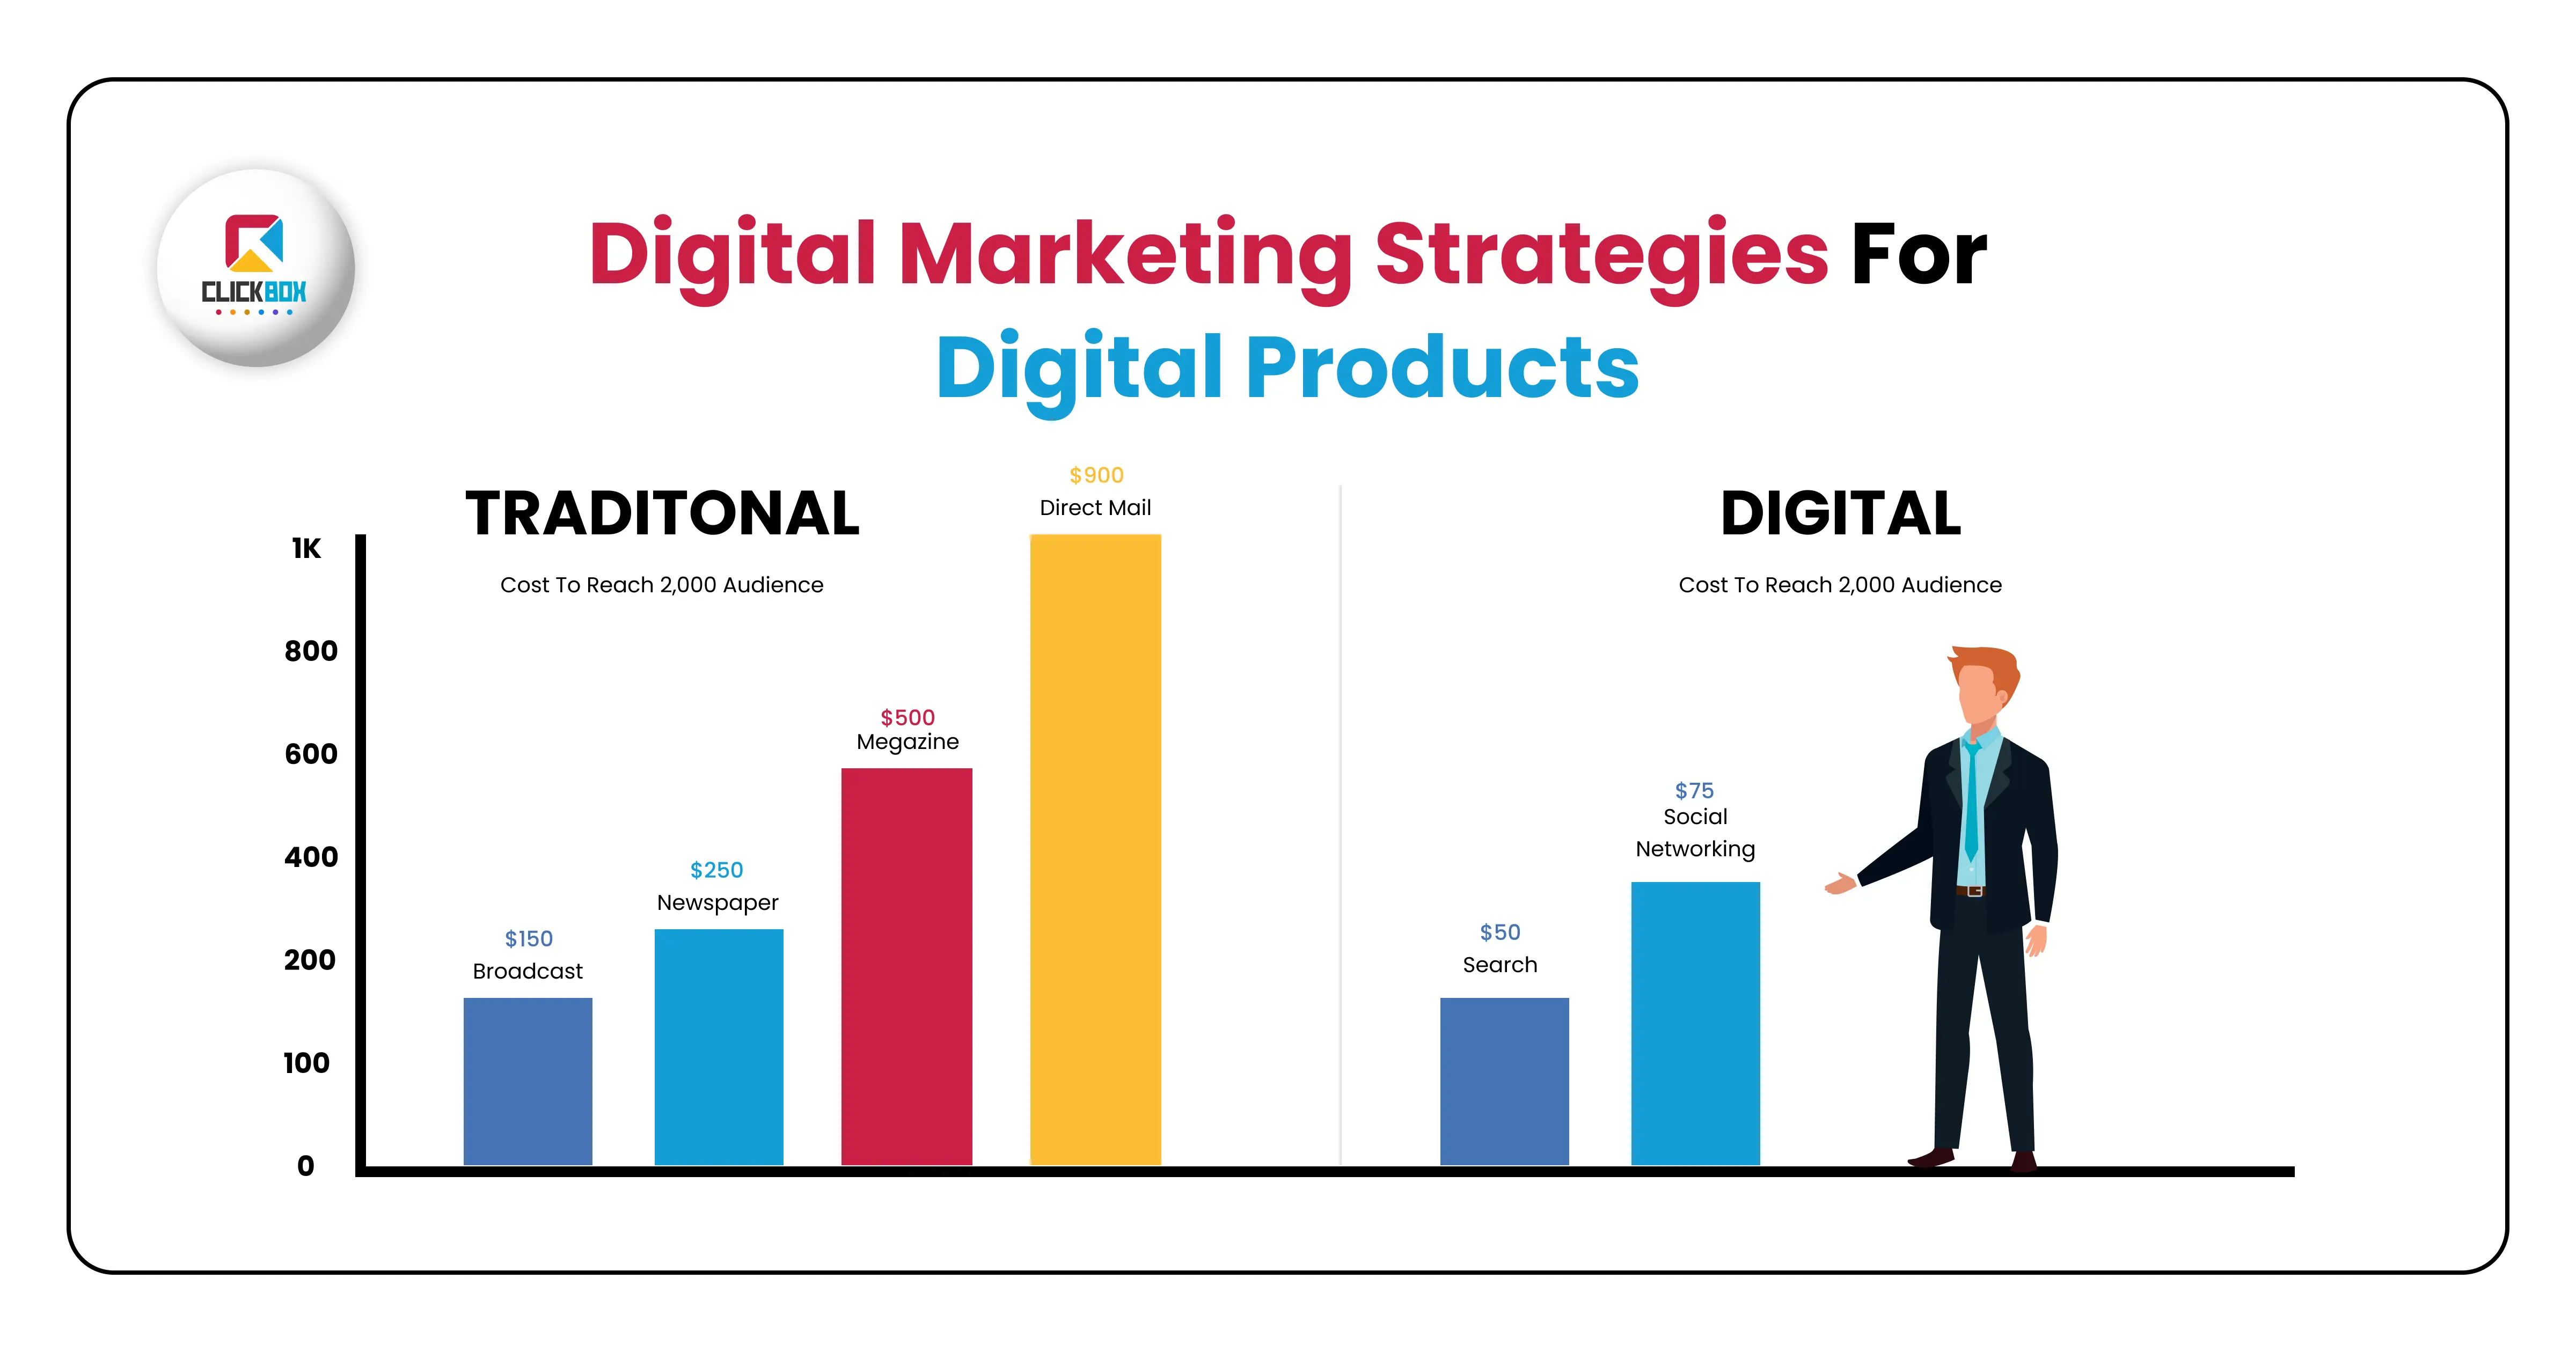 Digital Marketing Strategies for Digital Products